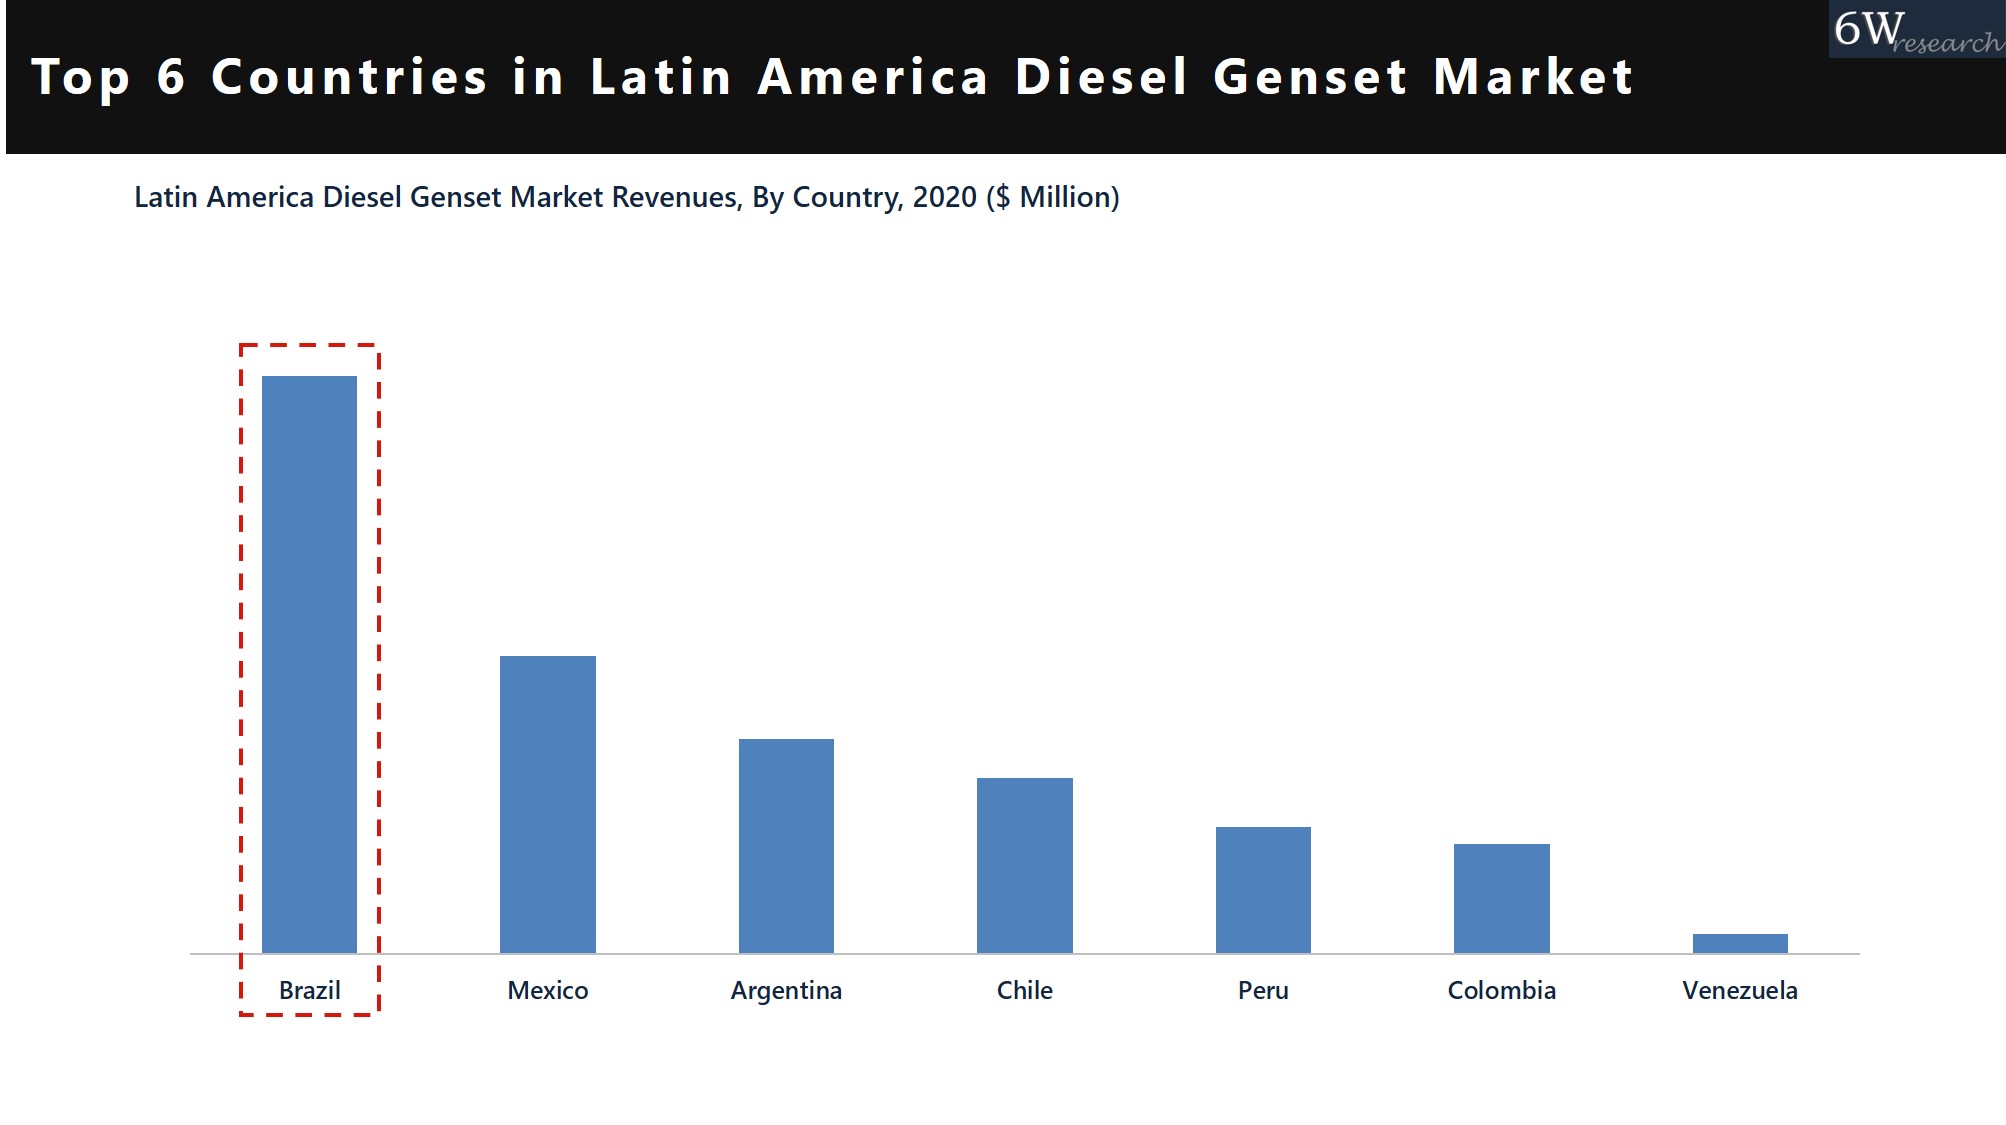 Brazil Diesel Genset Market